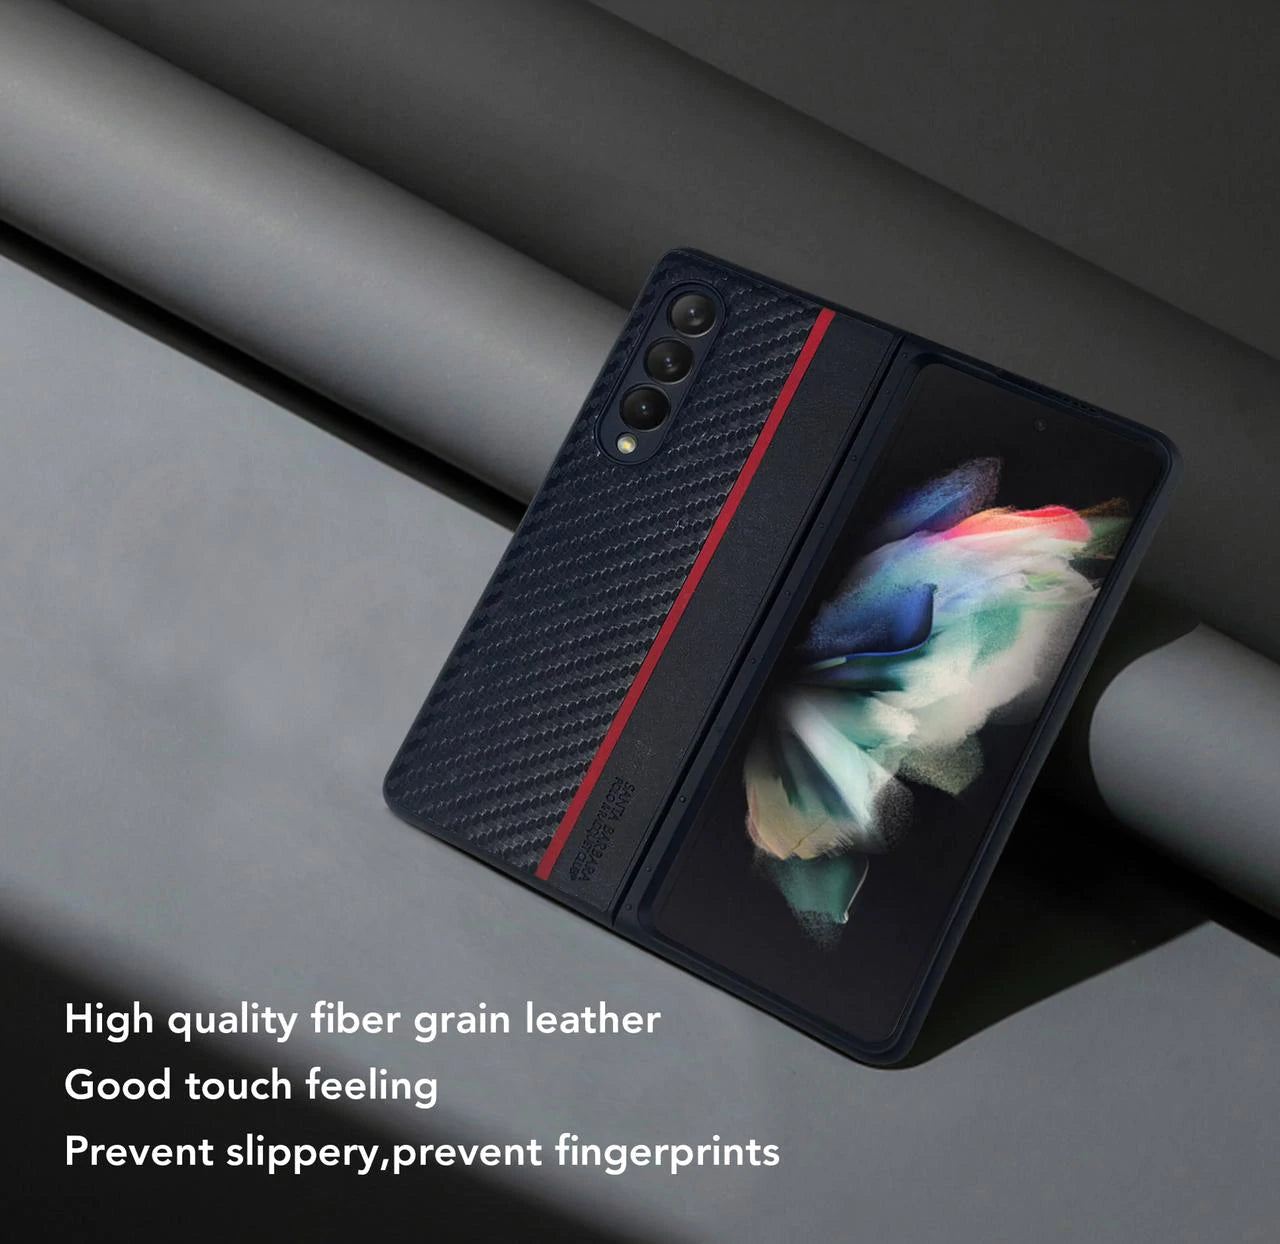 Galaxy Z Fold 3 Hazel Fiber Grain Genuine Leather Case-Black